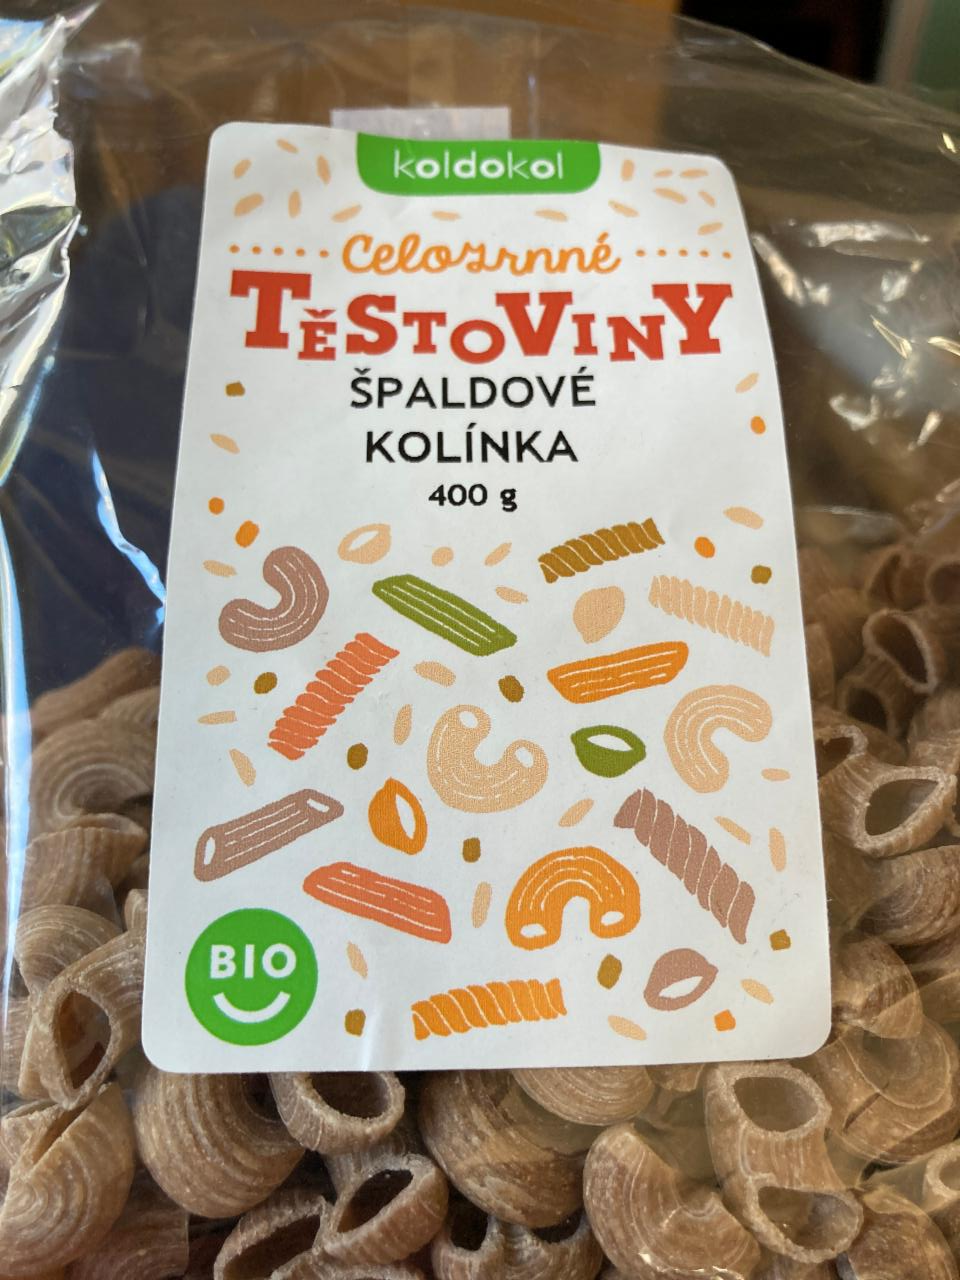 Fotografie - Bezvaječné špaldové celozrnné těstoviny bio kolínka Koldokol